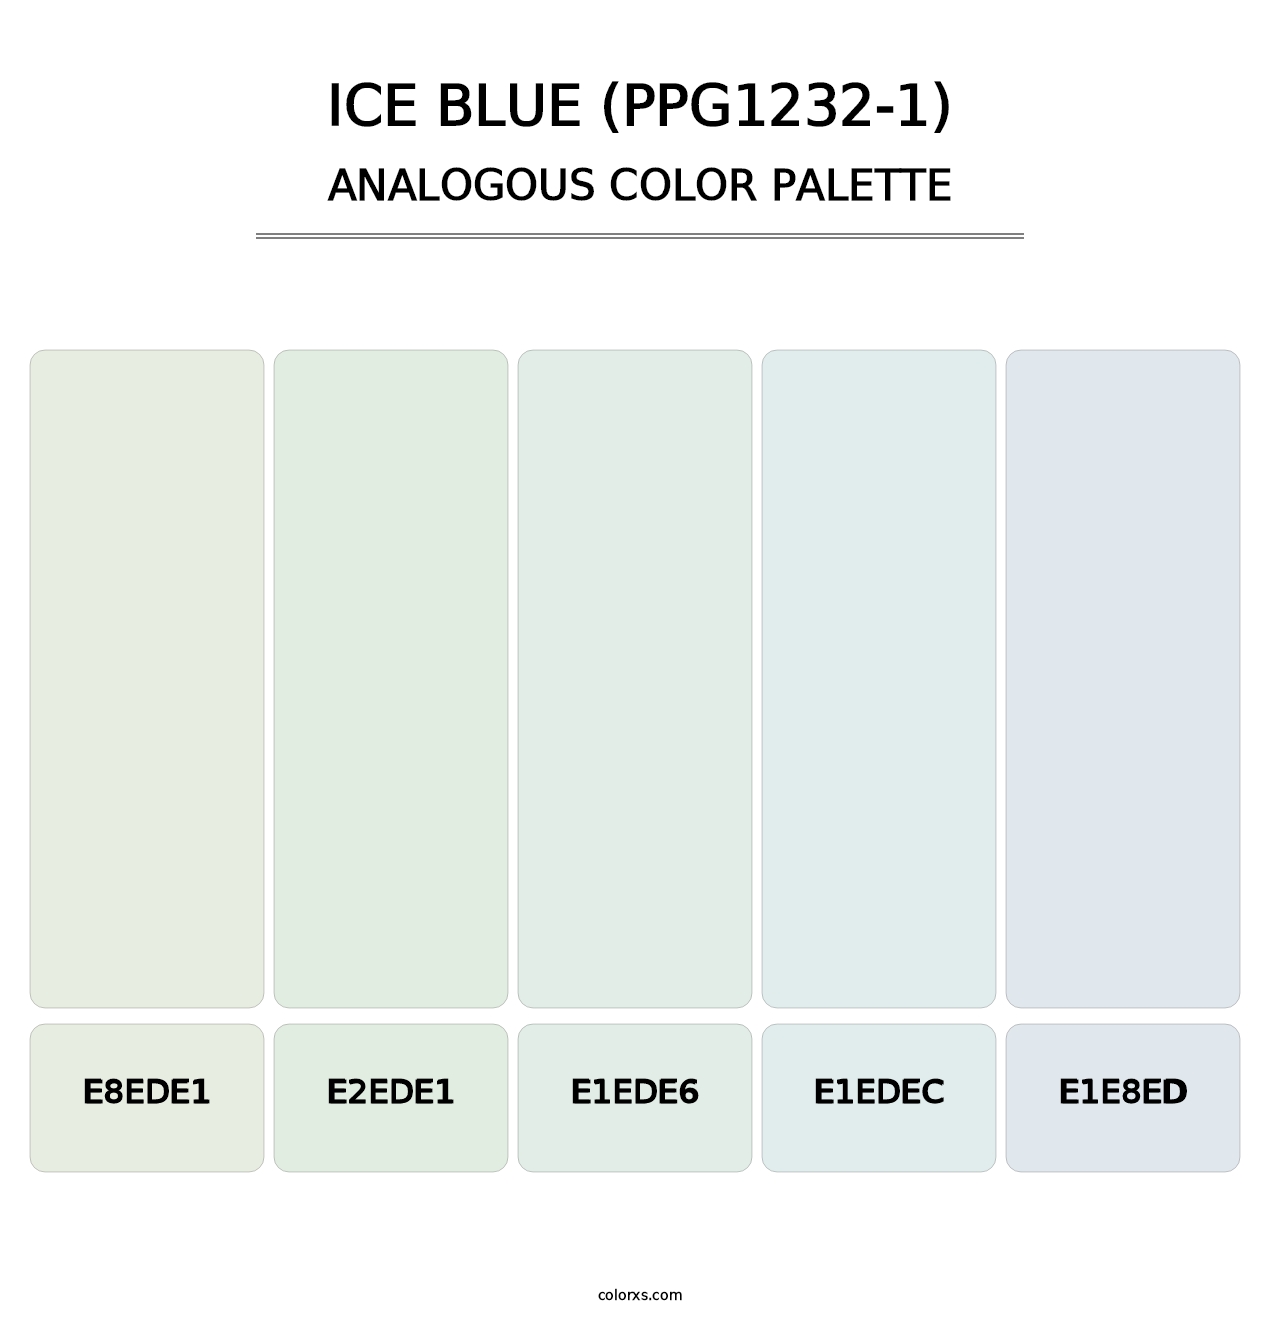 Ice Blue (PPG1232-1) - Analogous Color Palette